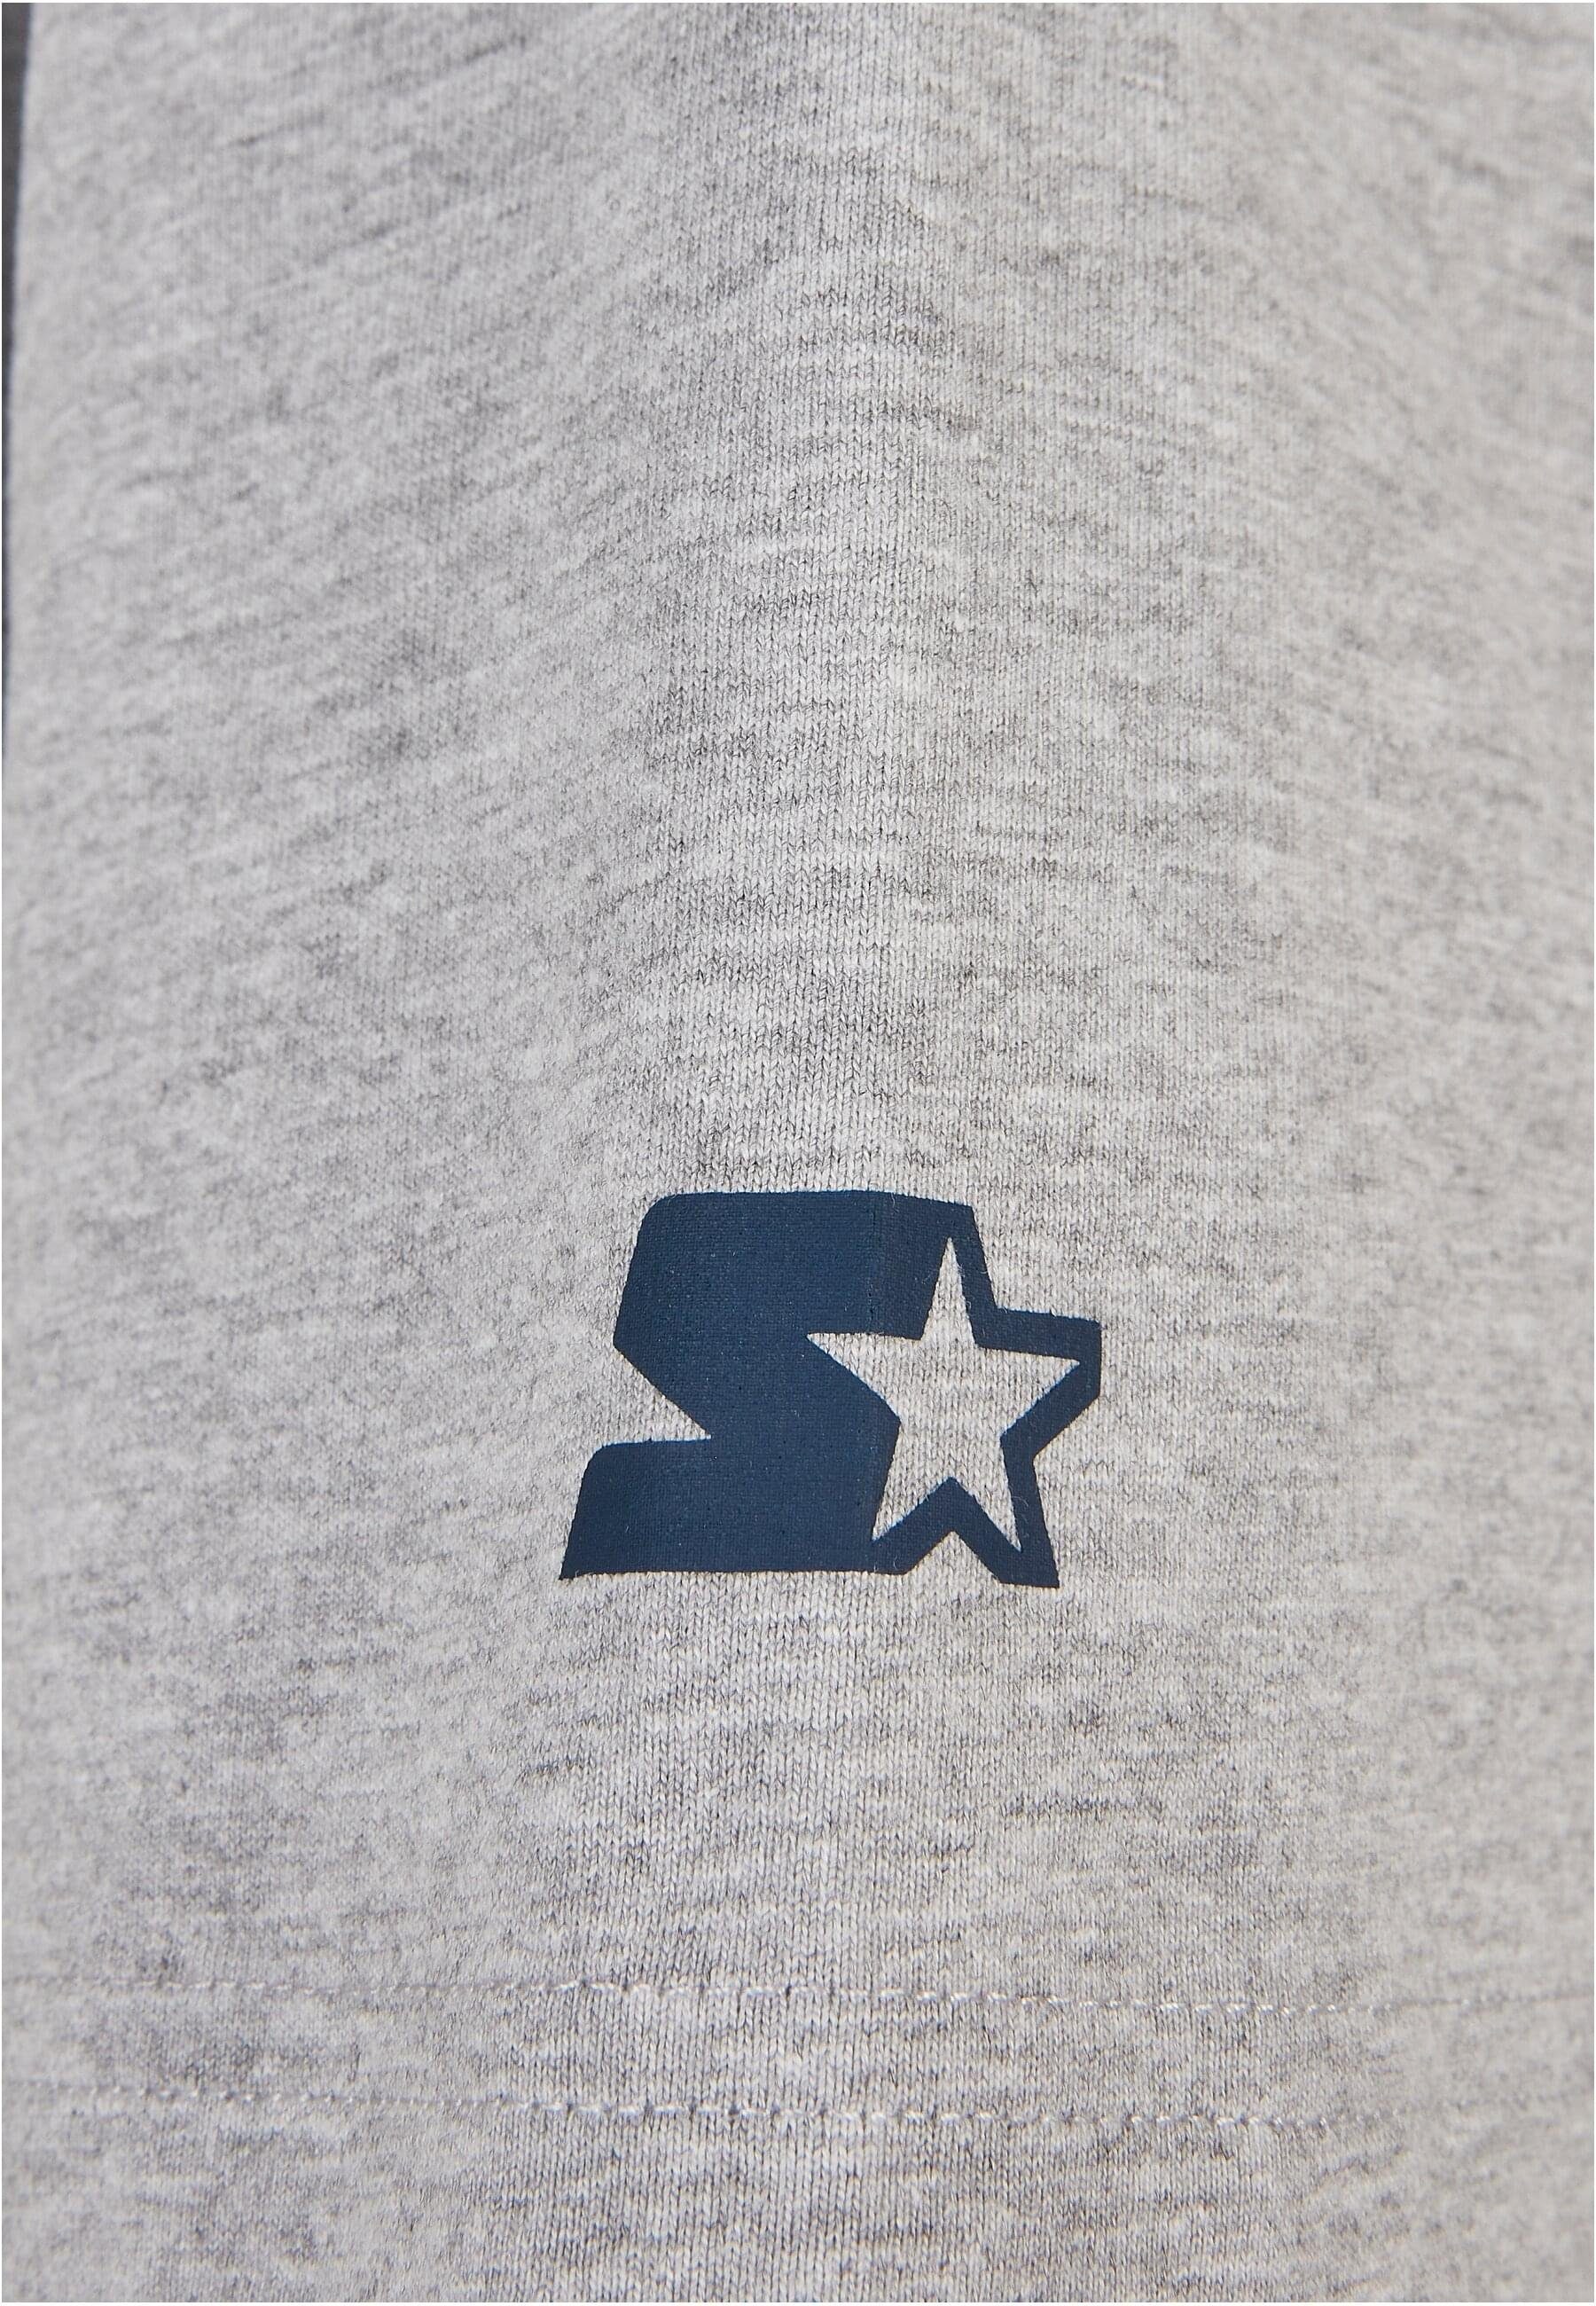 T-Shirt (1-tlg) Starter Black Starter heathergrey Label College Tee Herren